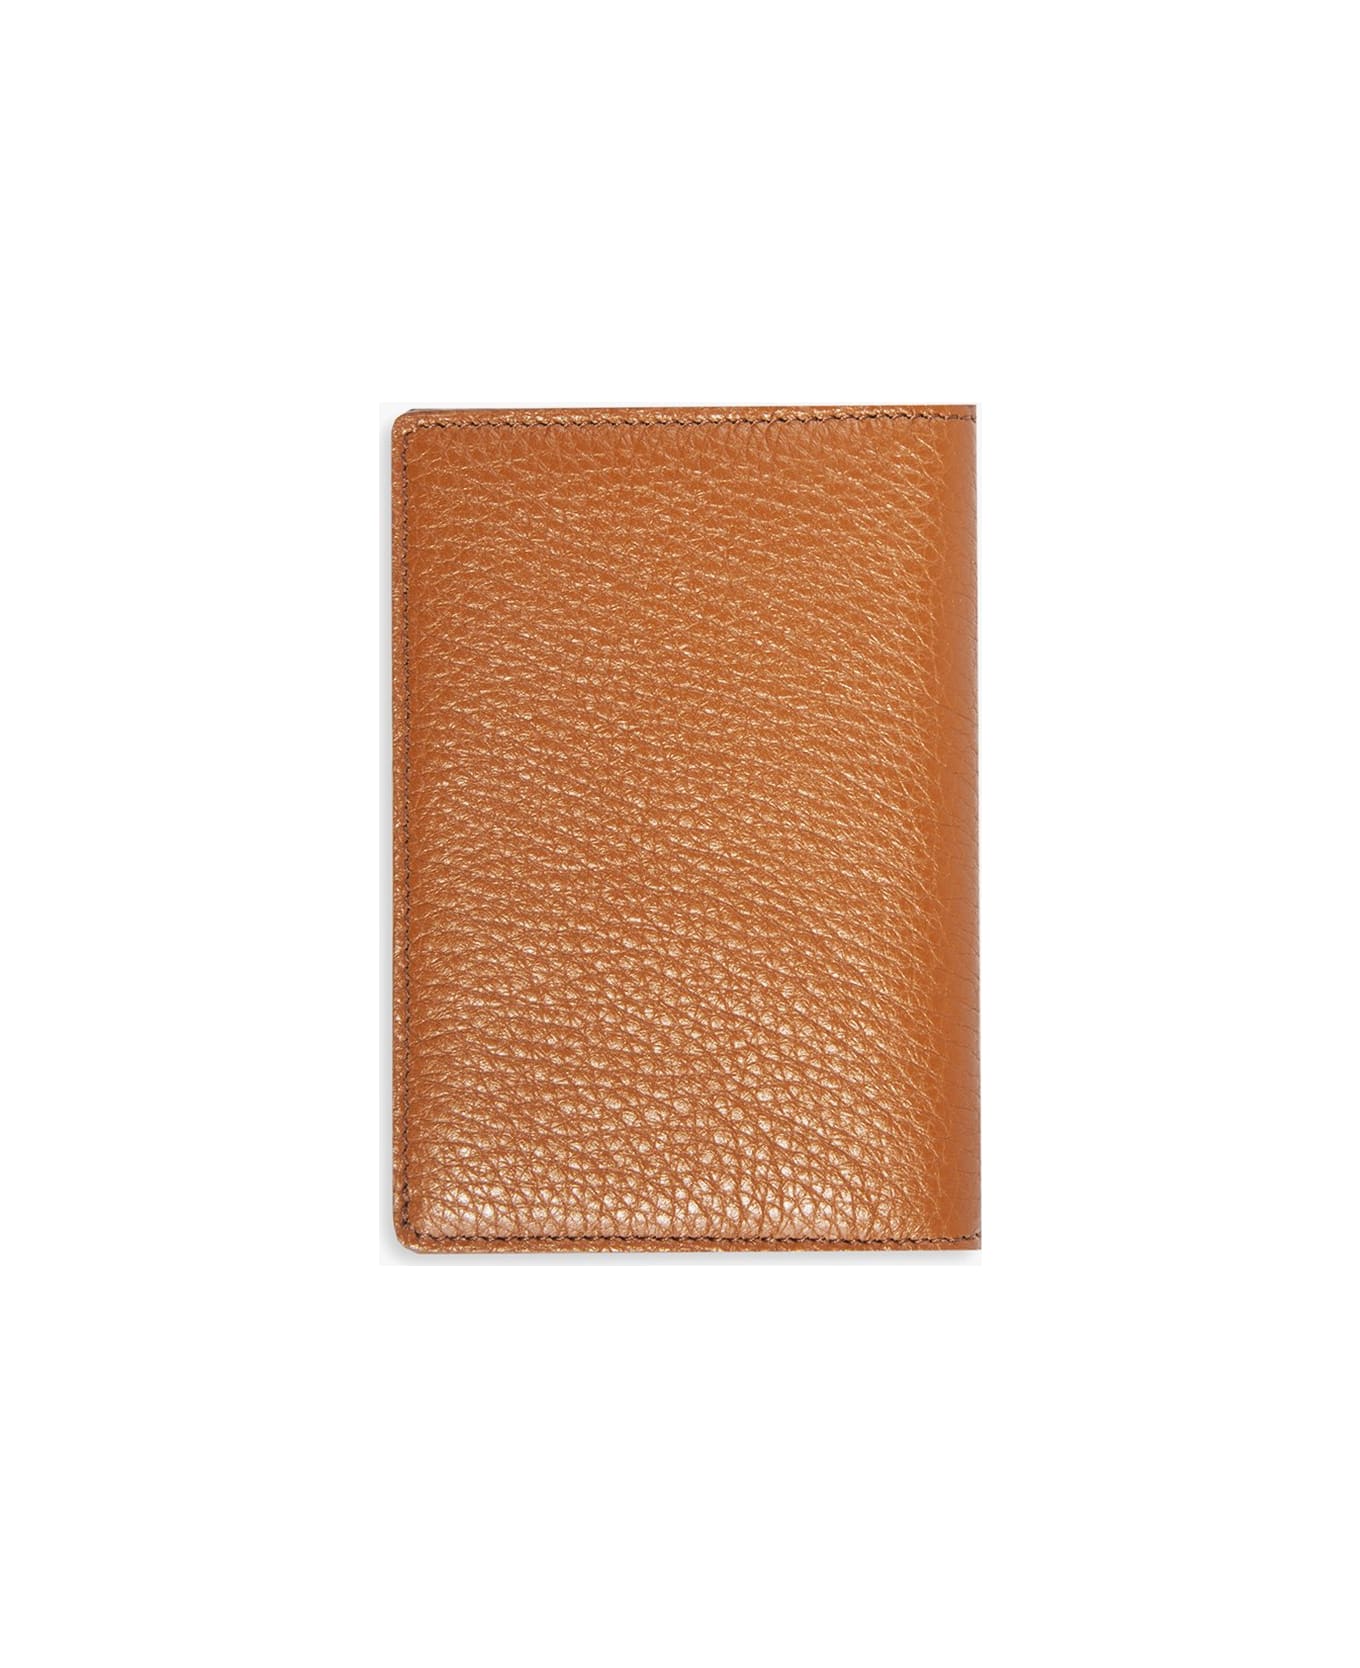 Larusmiani Passport Cover "concorde" - light brown